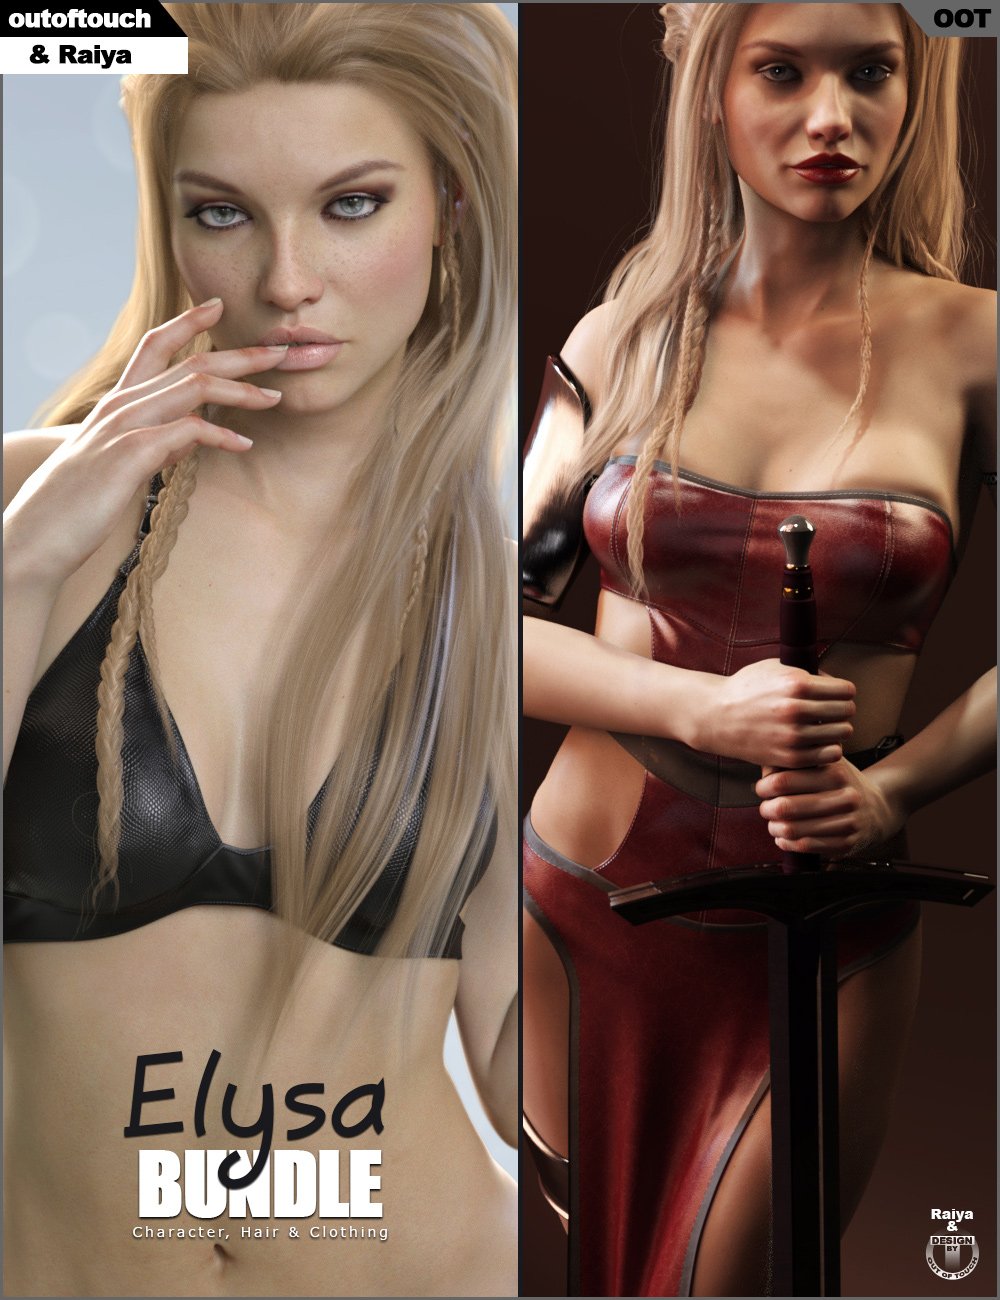 Elysa Character, Hair & Clothing Bundle by: outoftouchRaiya, 3D Models by Daz 3D